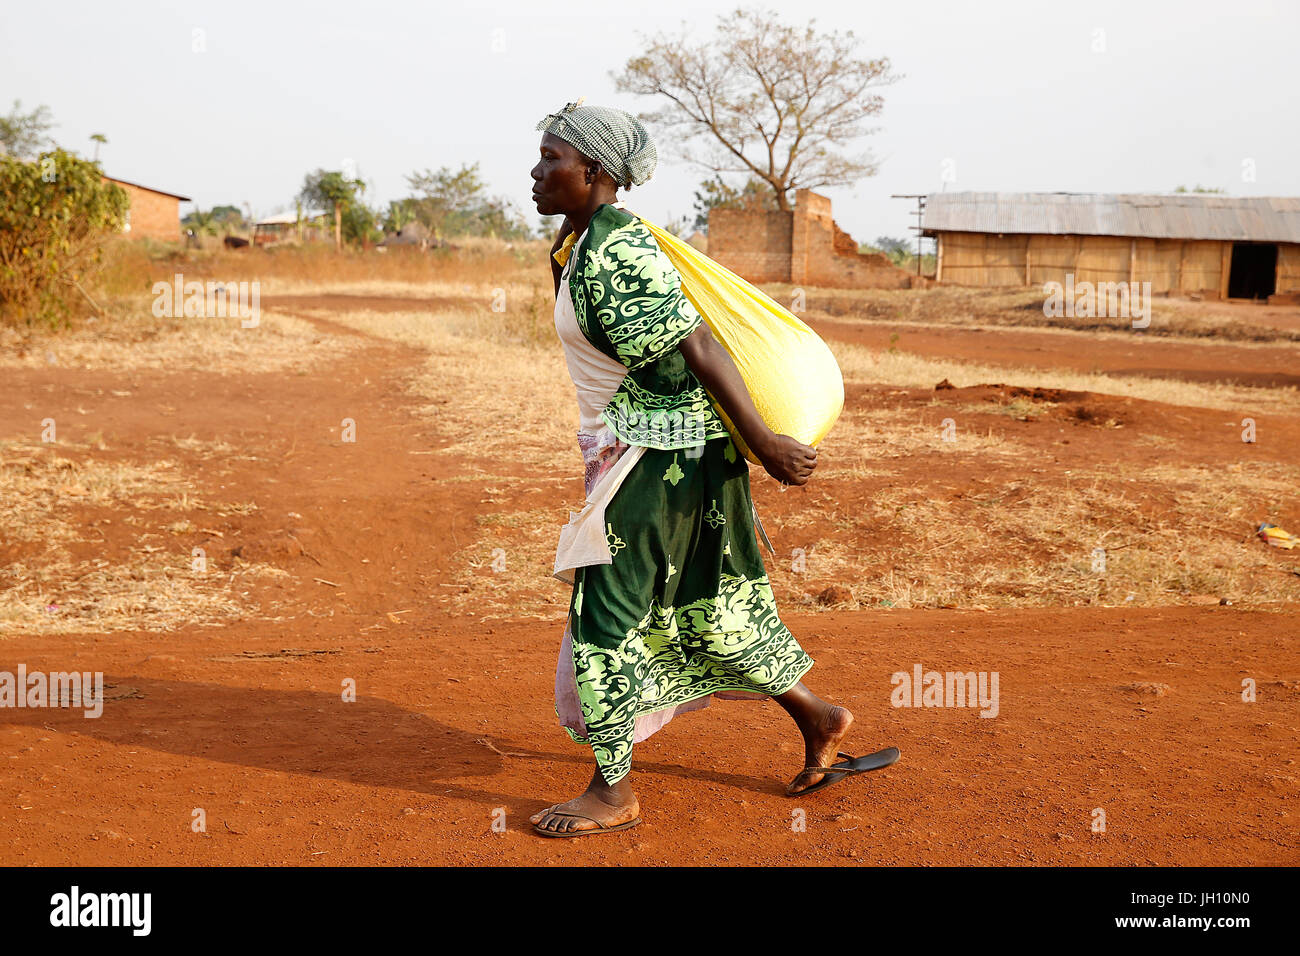 Villager carrying a bag. Uganda. Stock Photo